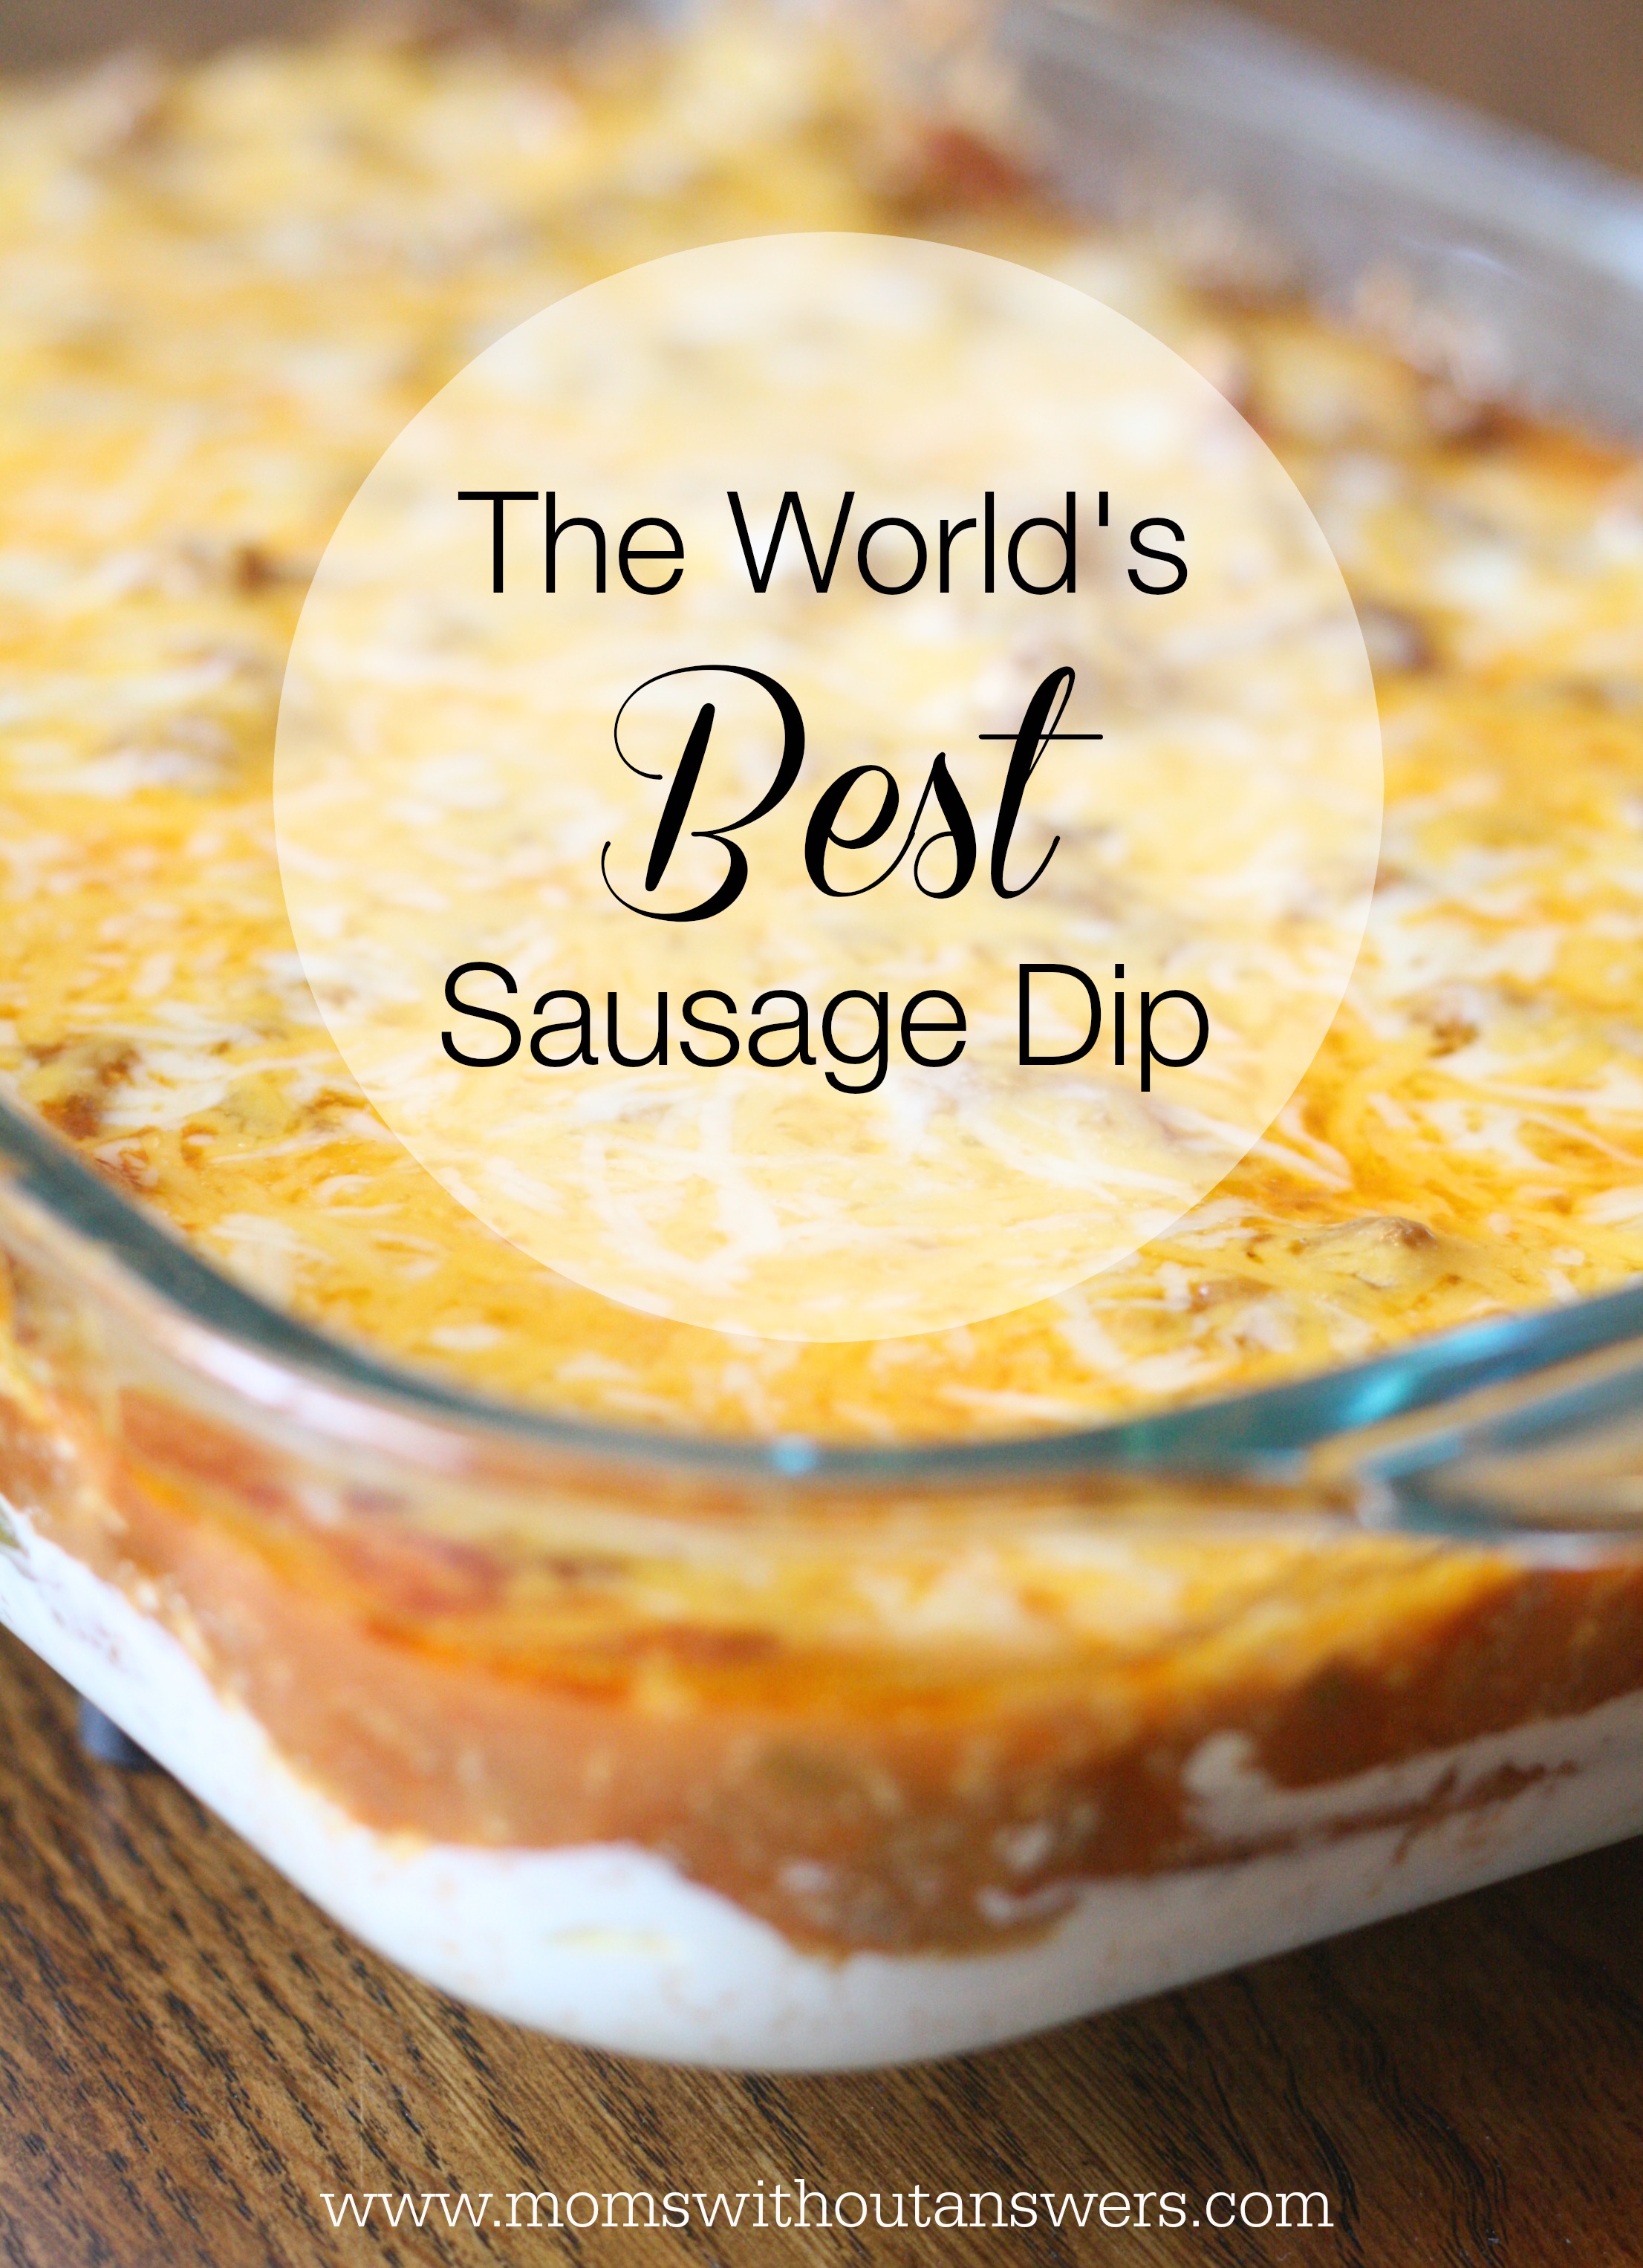 The World’s Best Sausage Dip